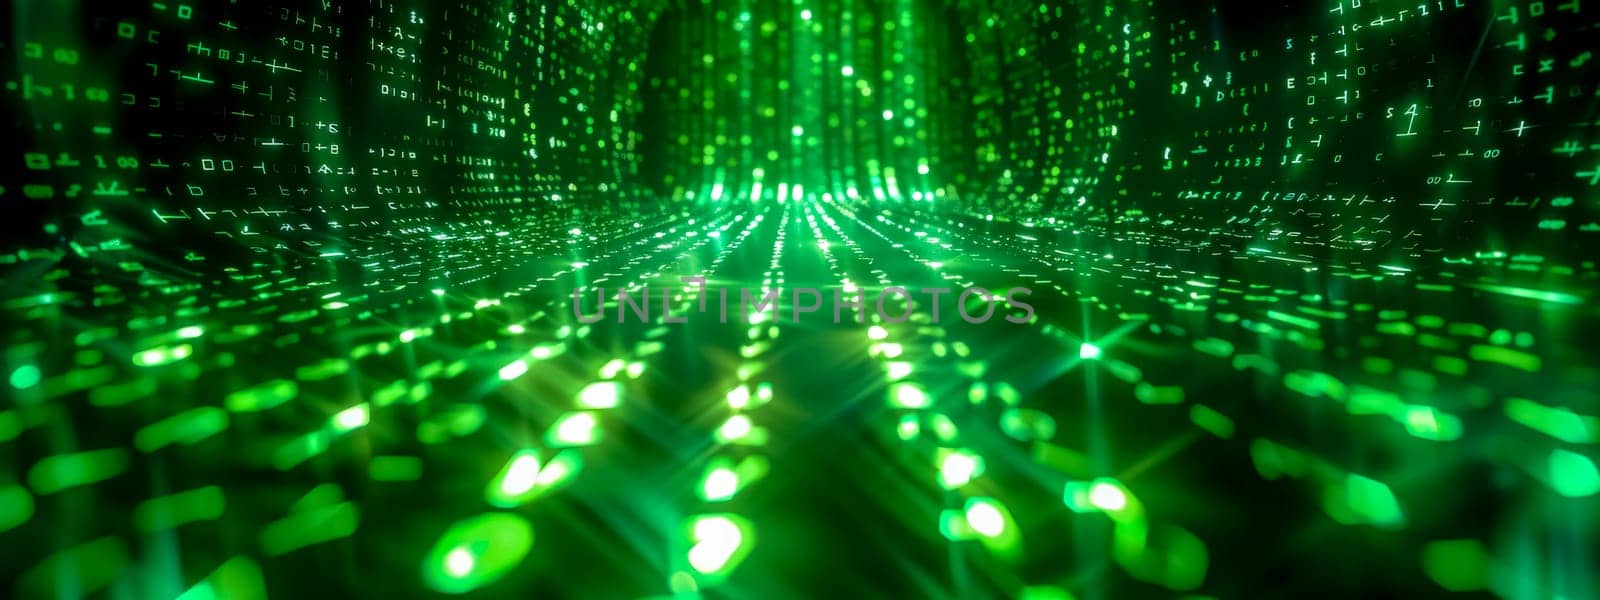 Digital data stream in cyberspace by Edophoto